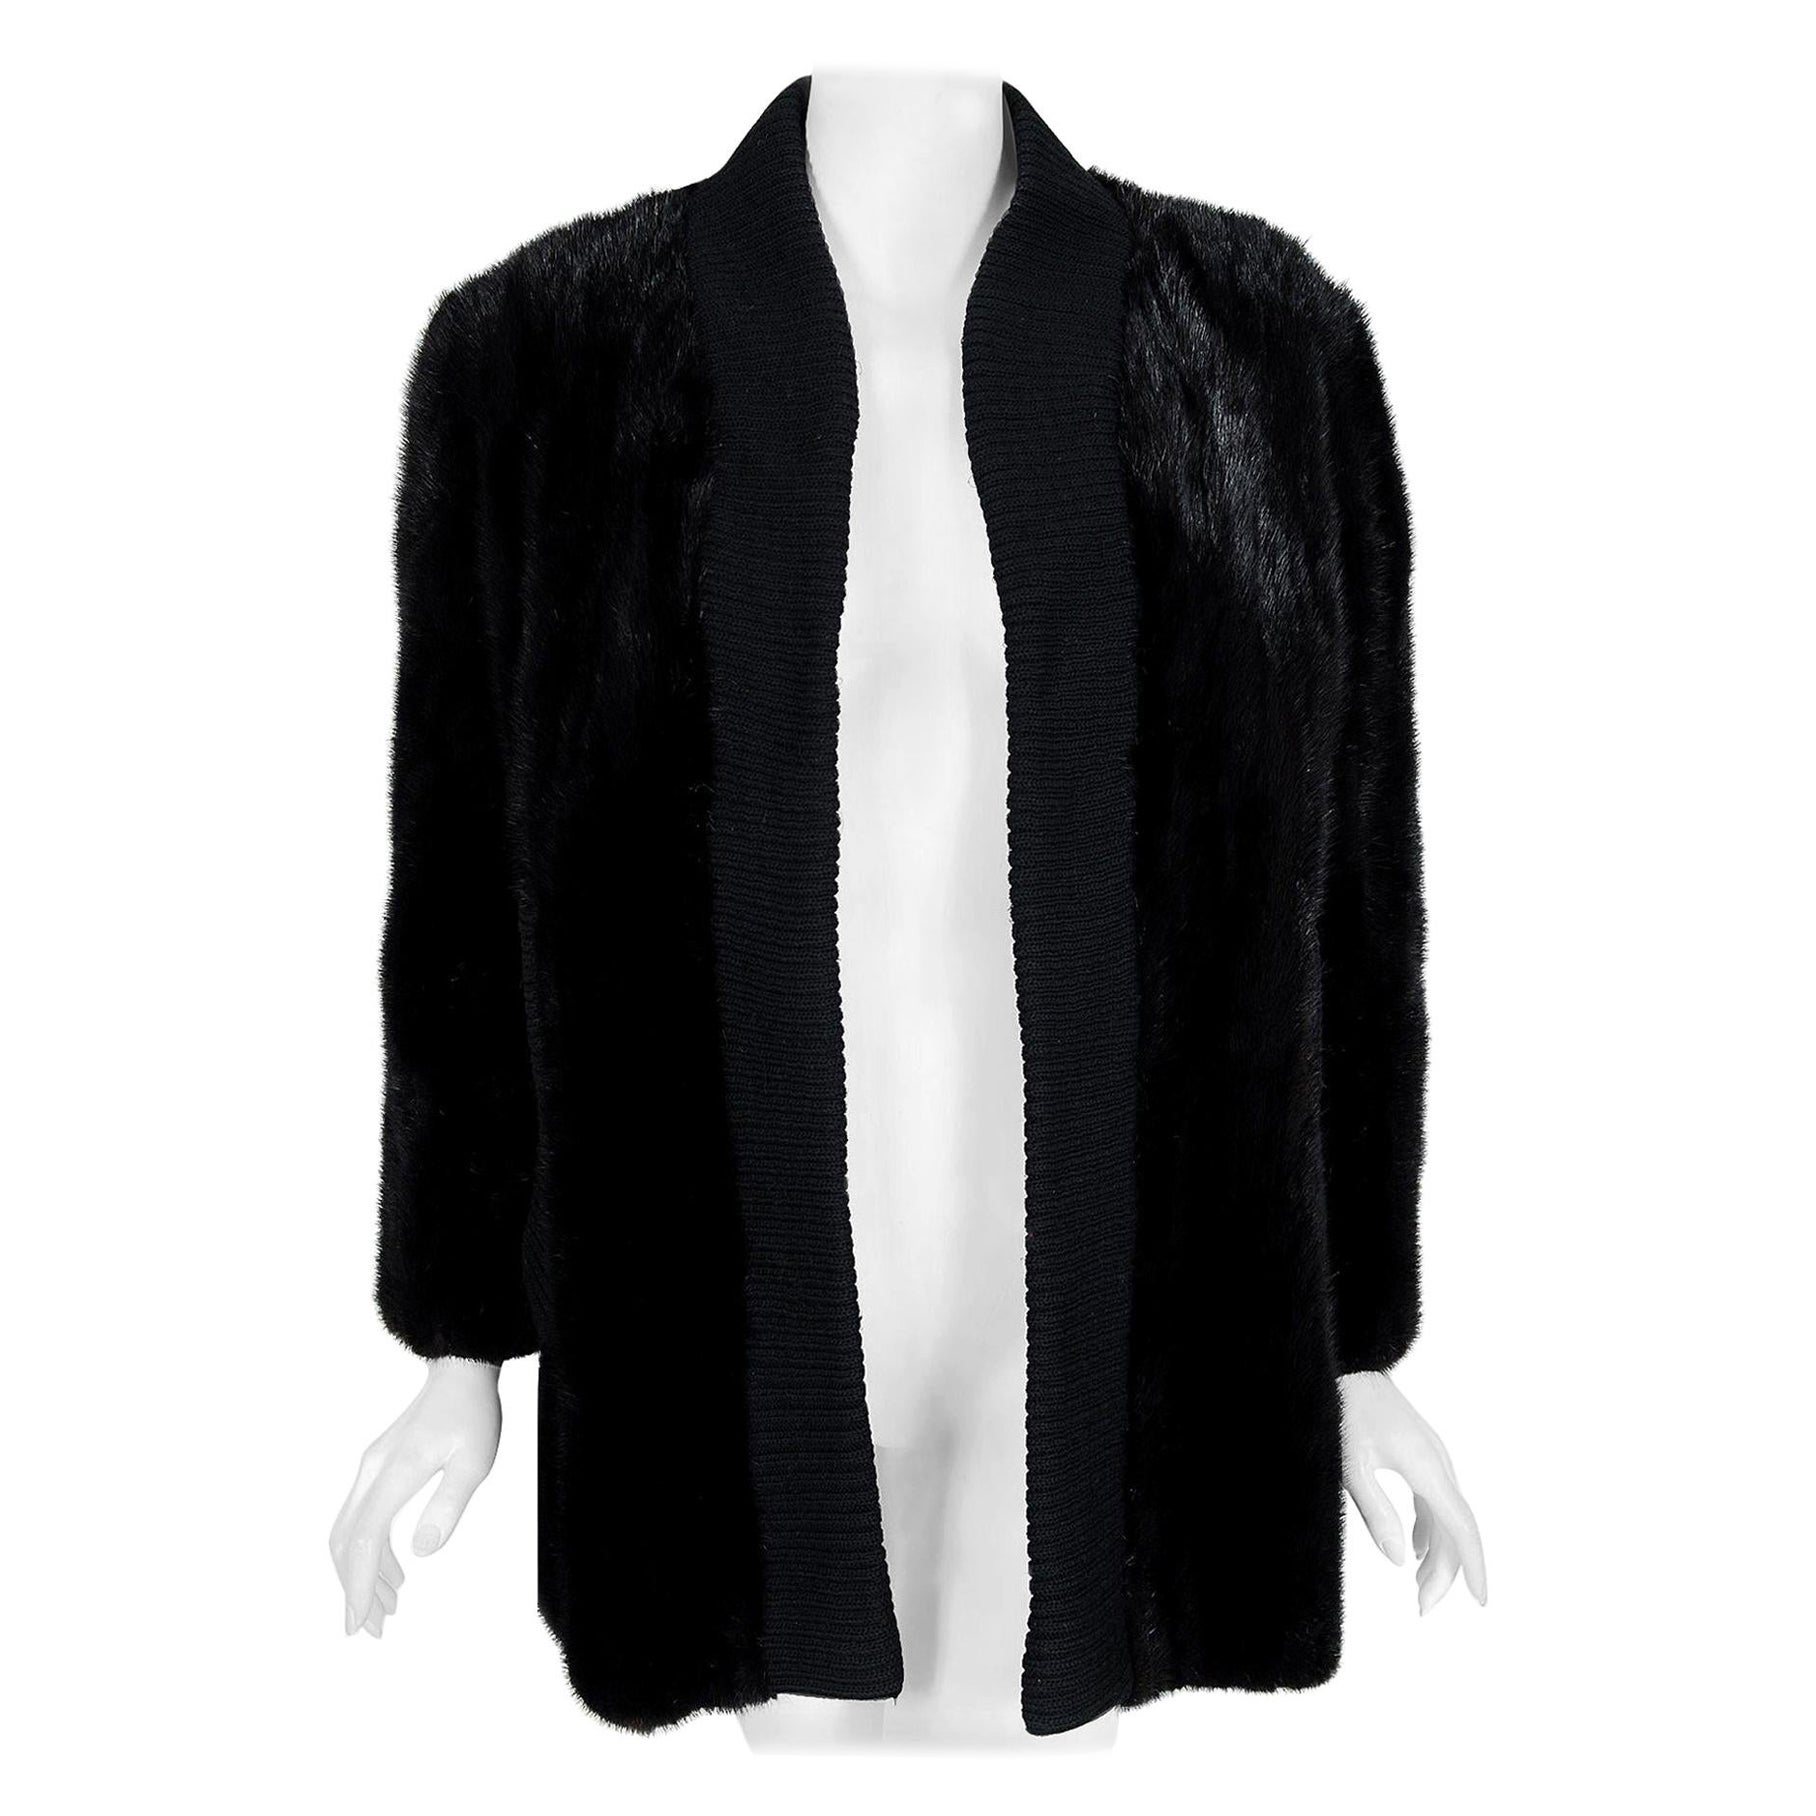 Vintage 1968 Pierre Cardin Couture Mink-Fur & Wool Knit Cardigan Sweater Jacket